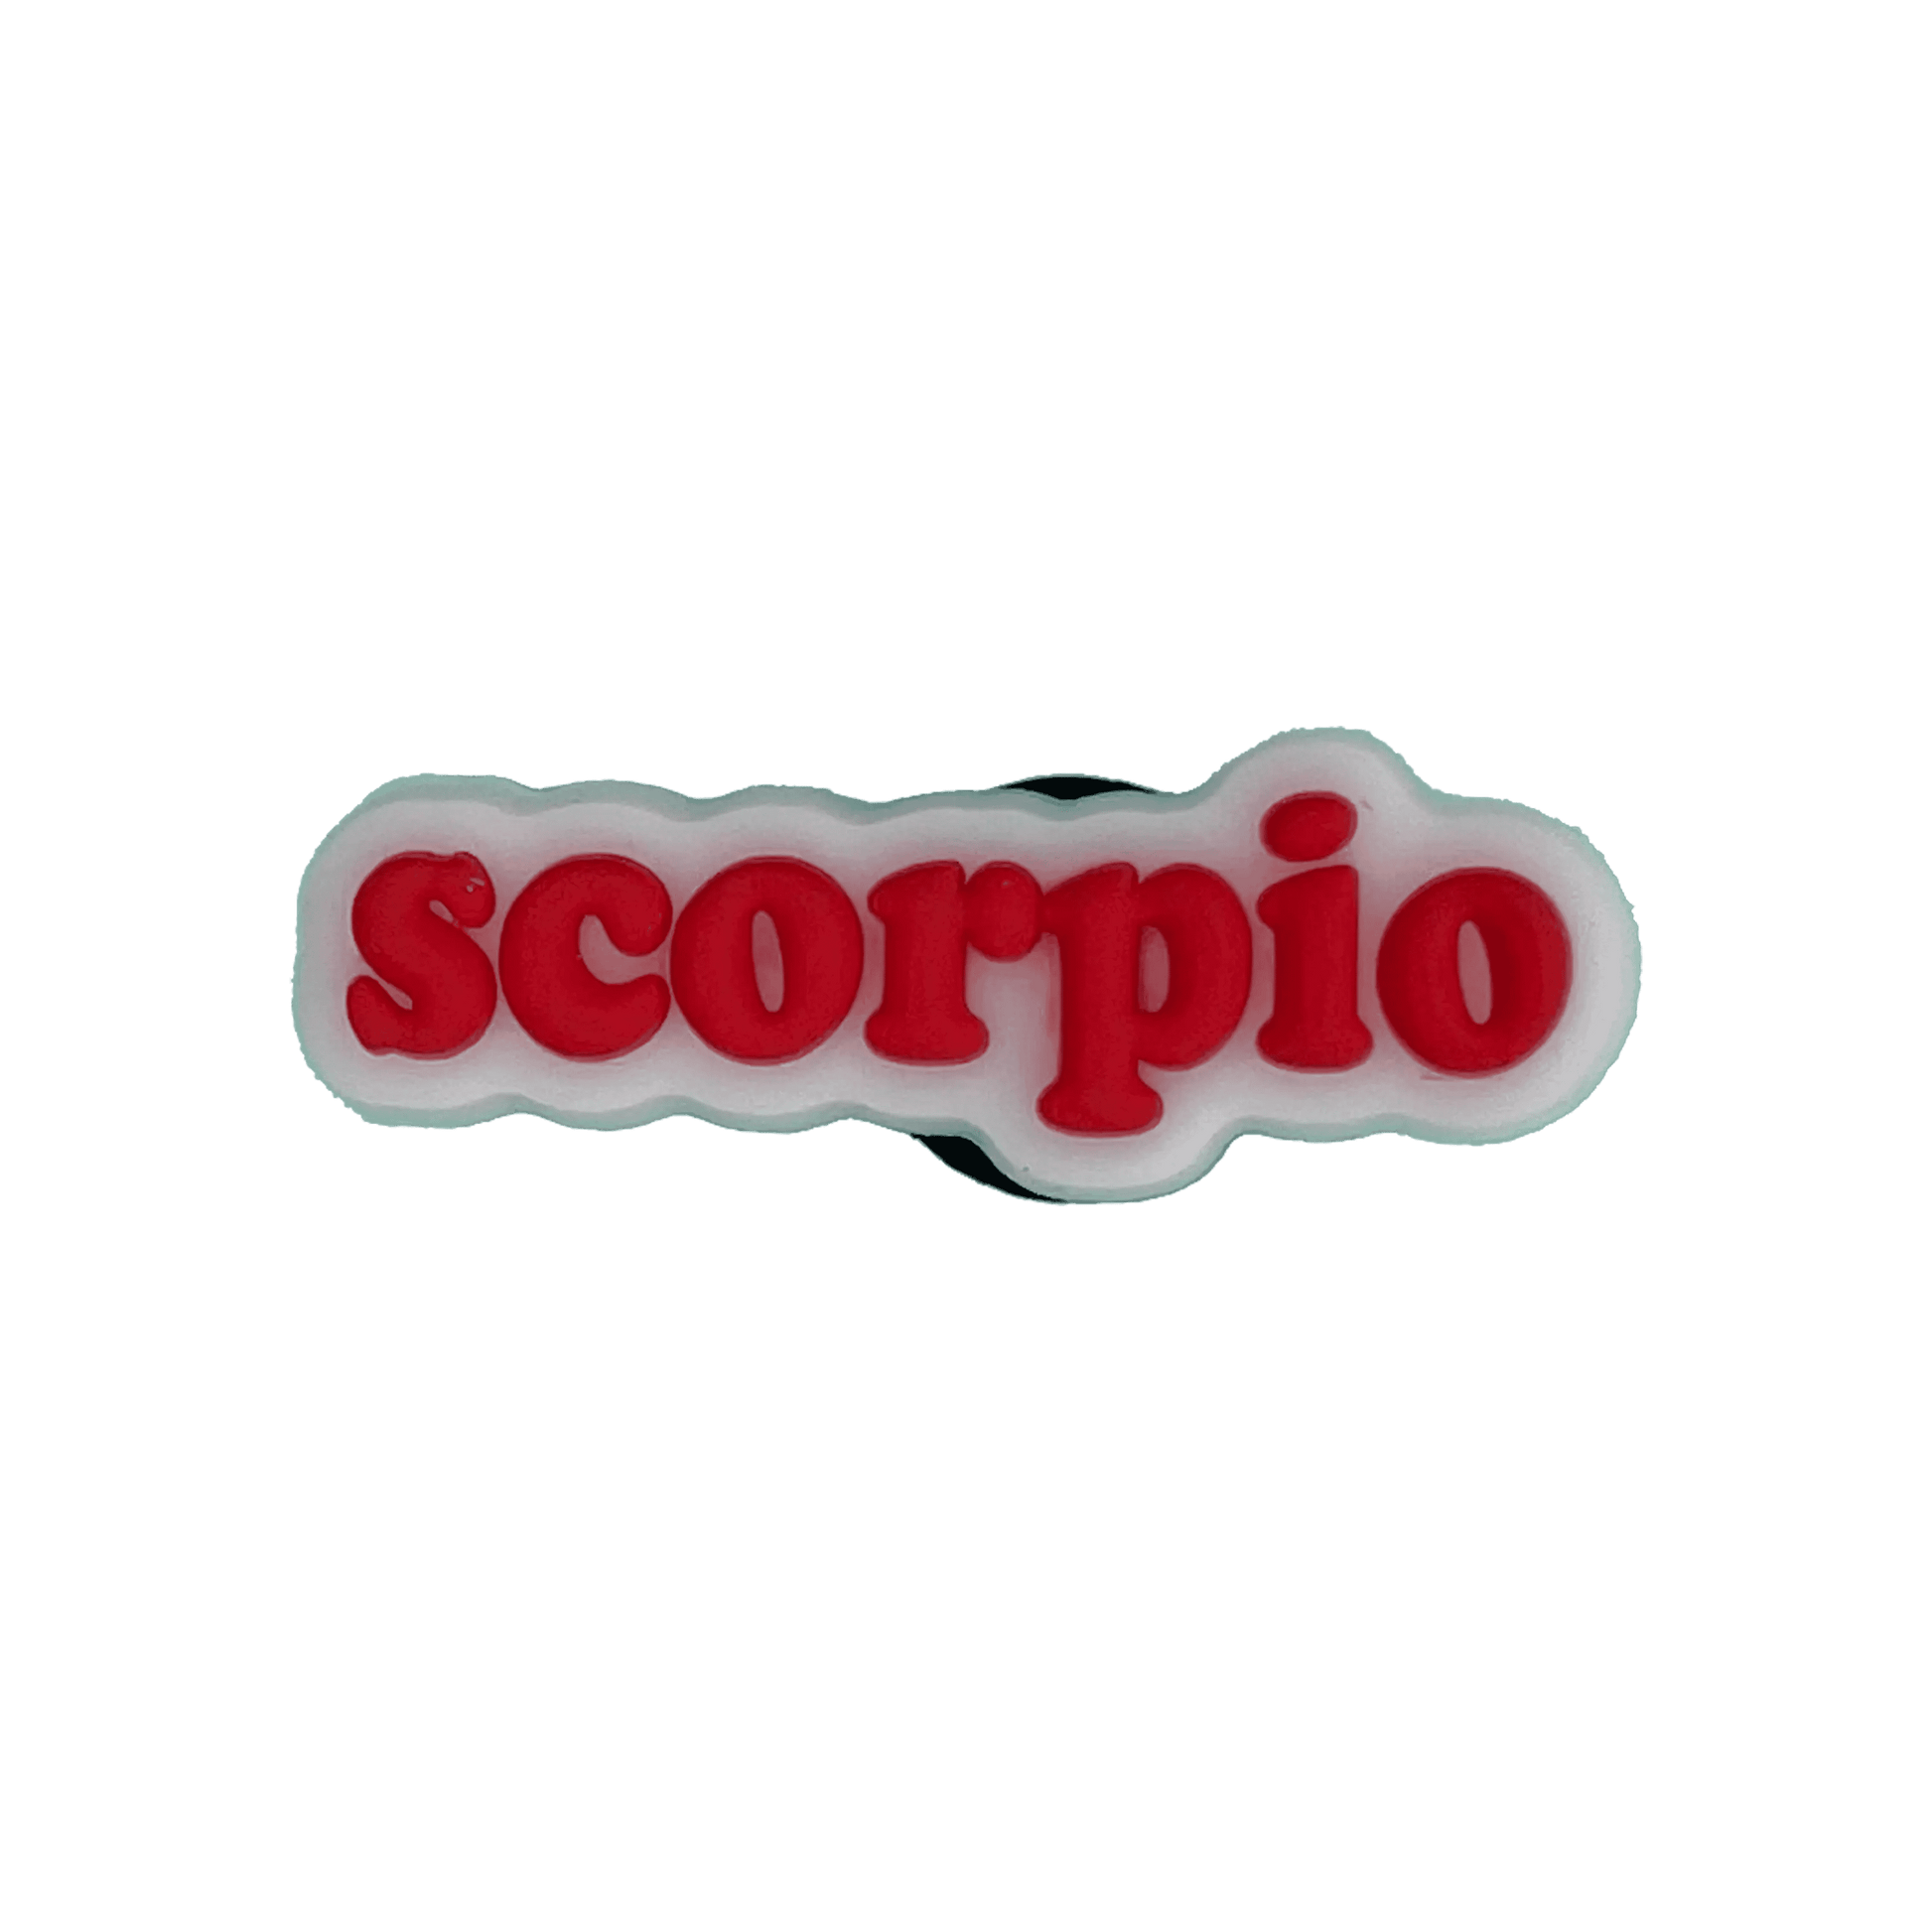 Scorpio Charm Charms By Prince